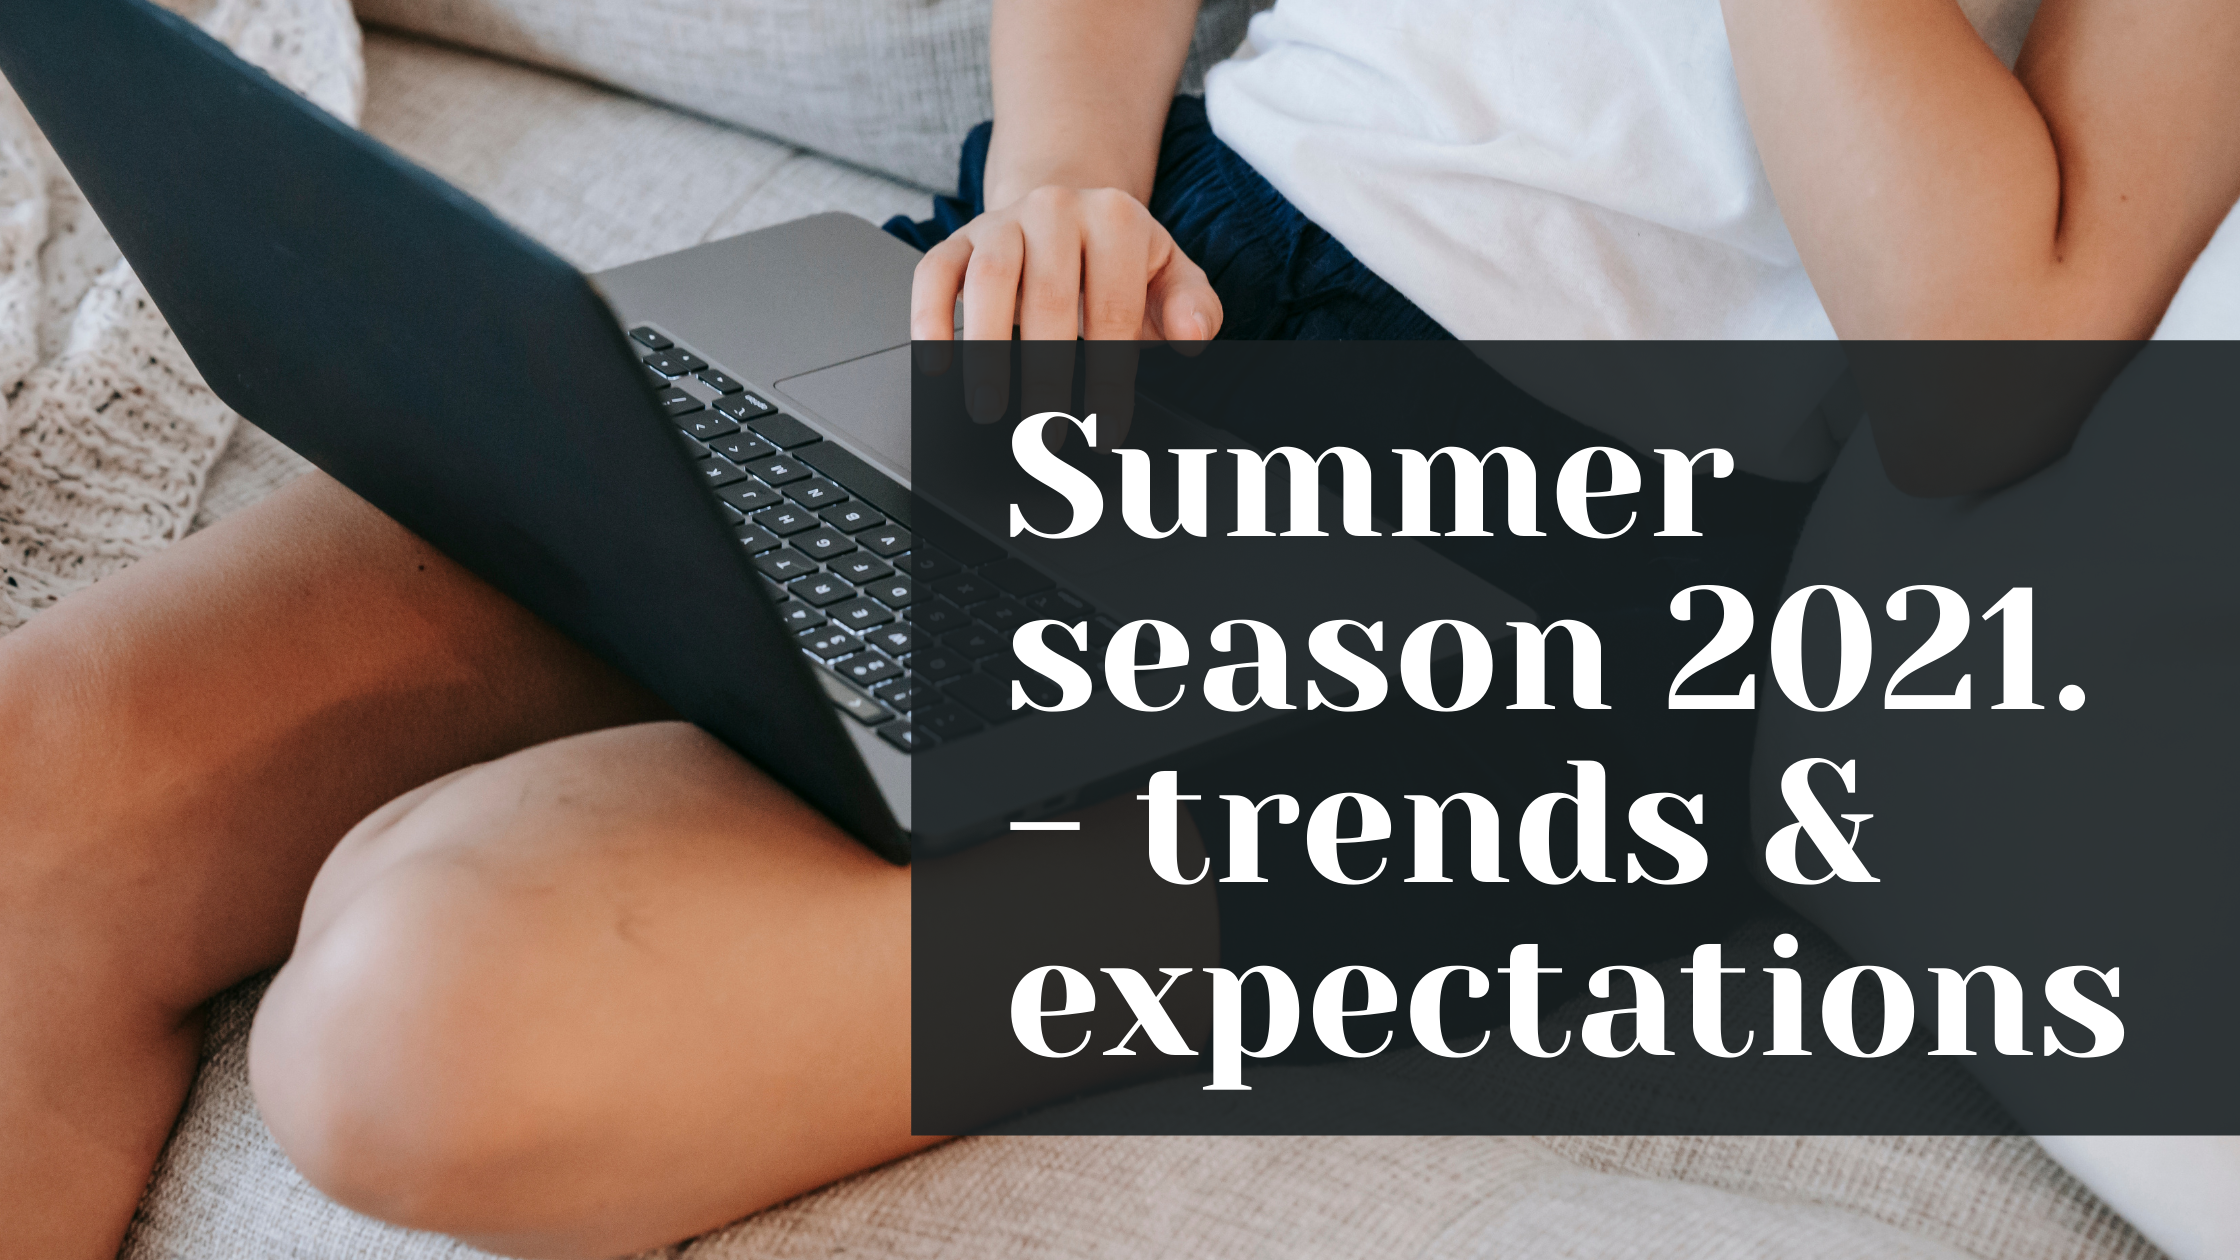 Summer season 2021. - trends & expectations